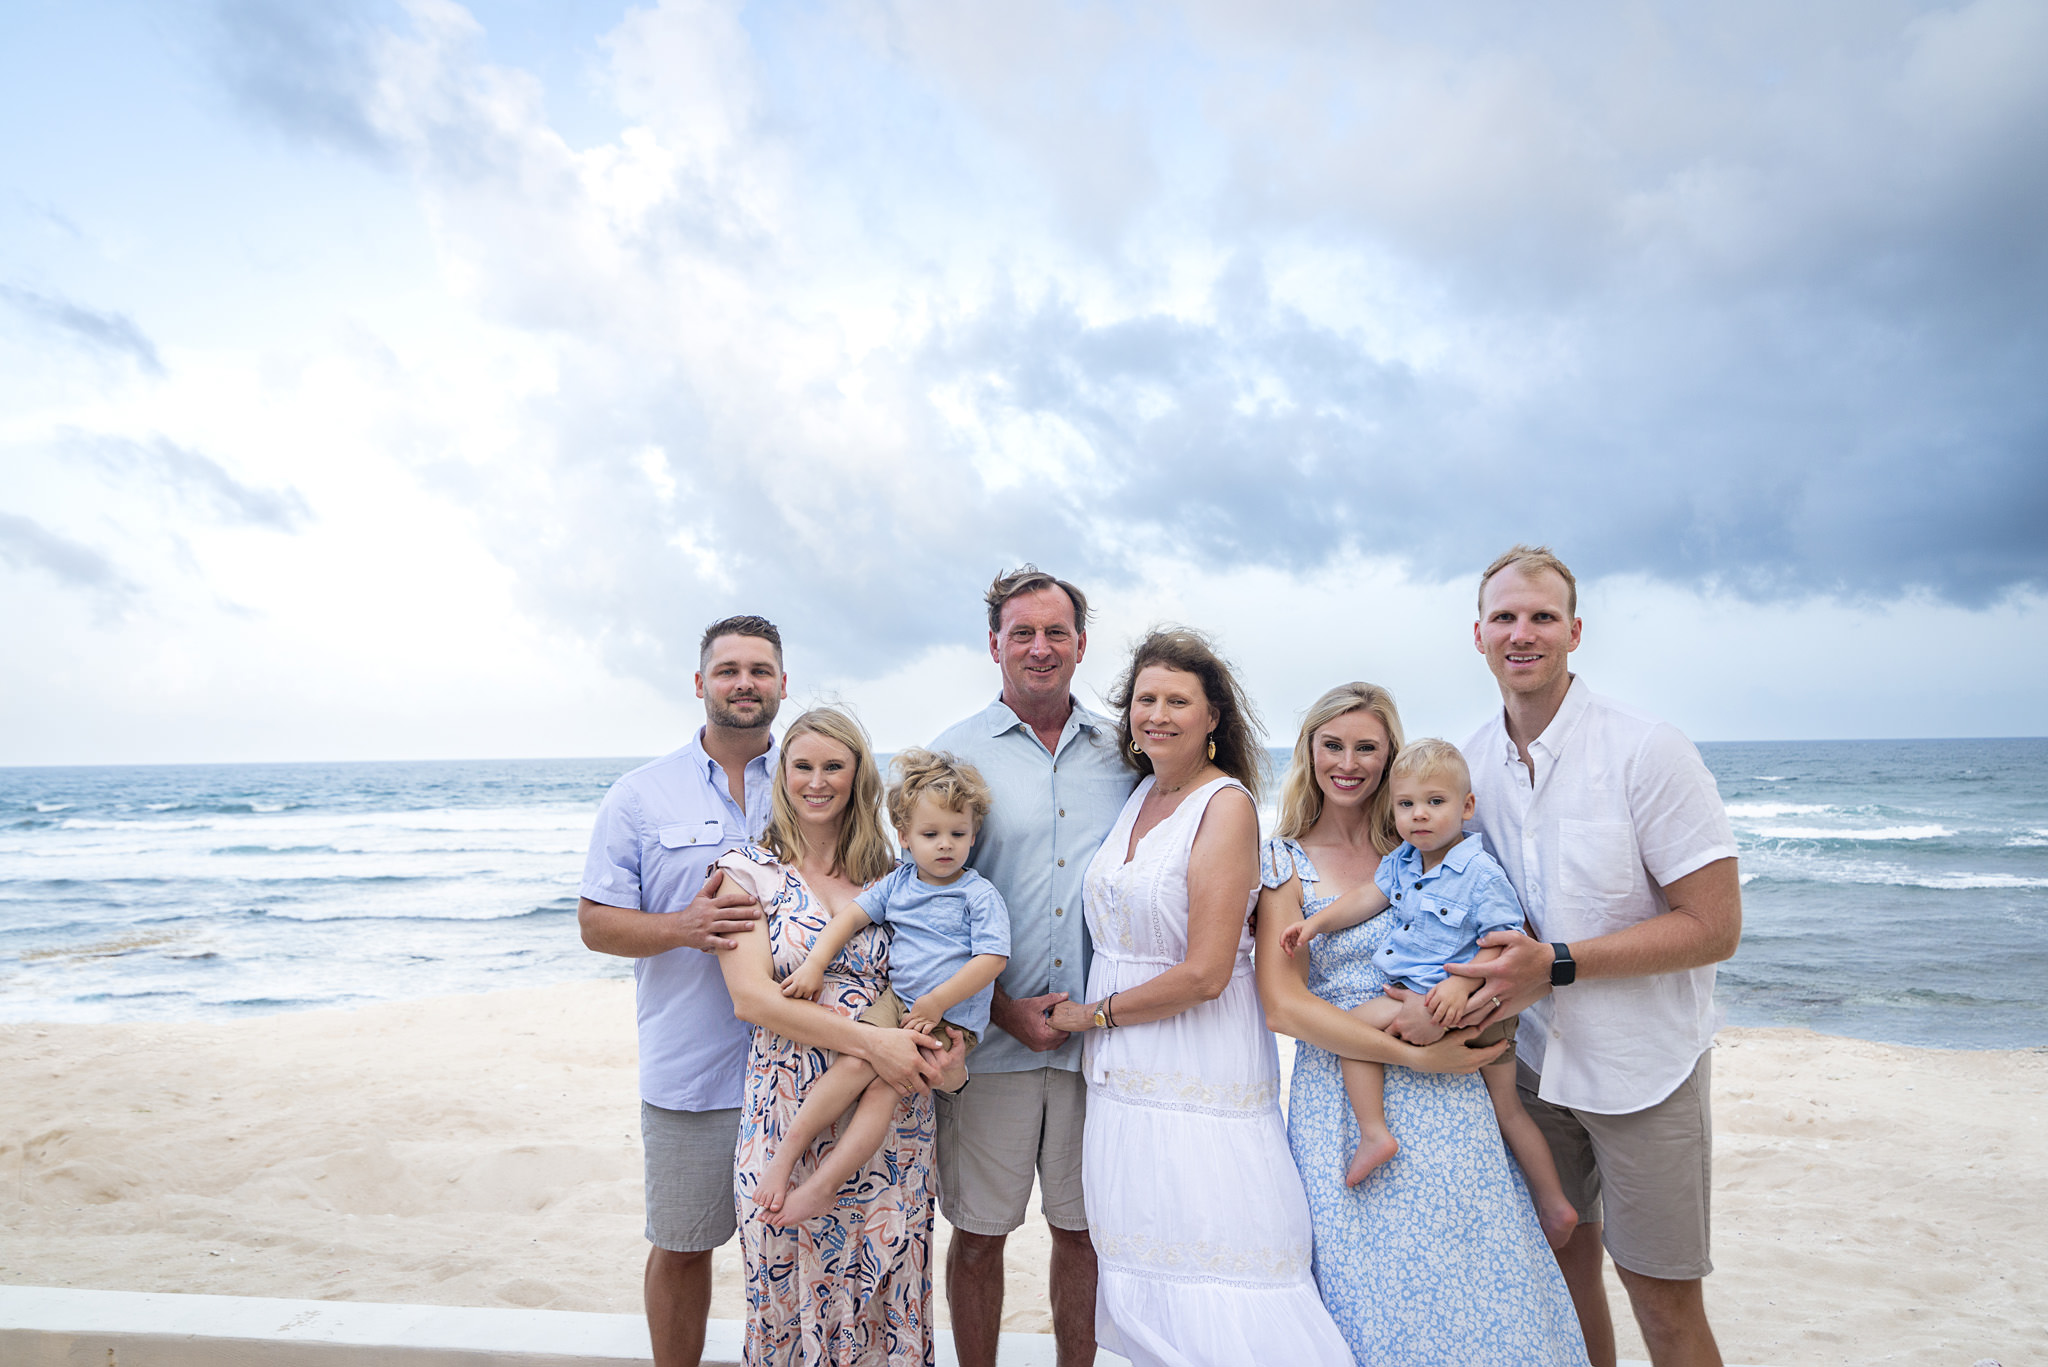 Tulum Family Photoshoot - Tulum Beach Photoshoot with The Brown Family ...